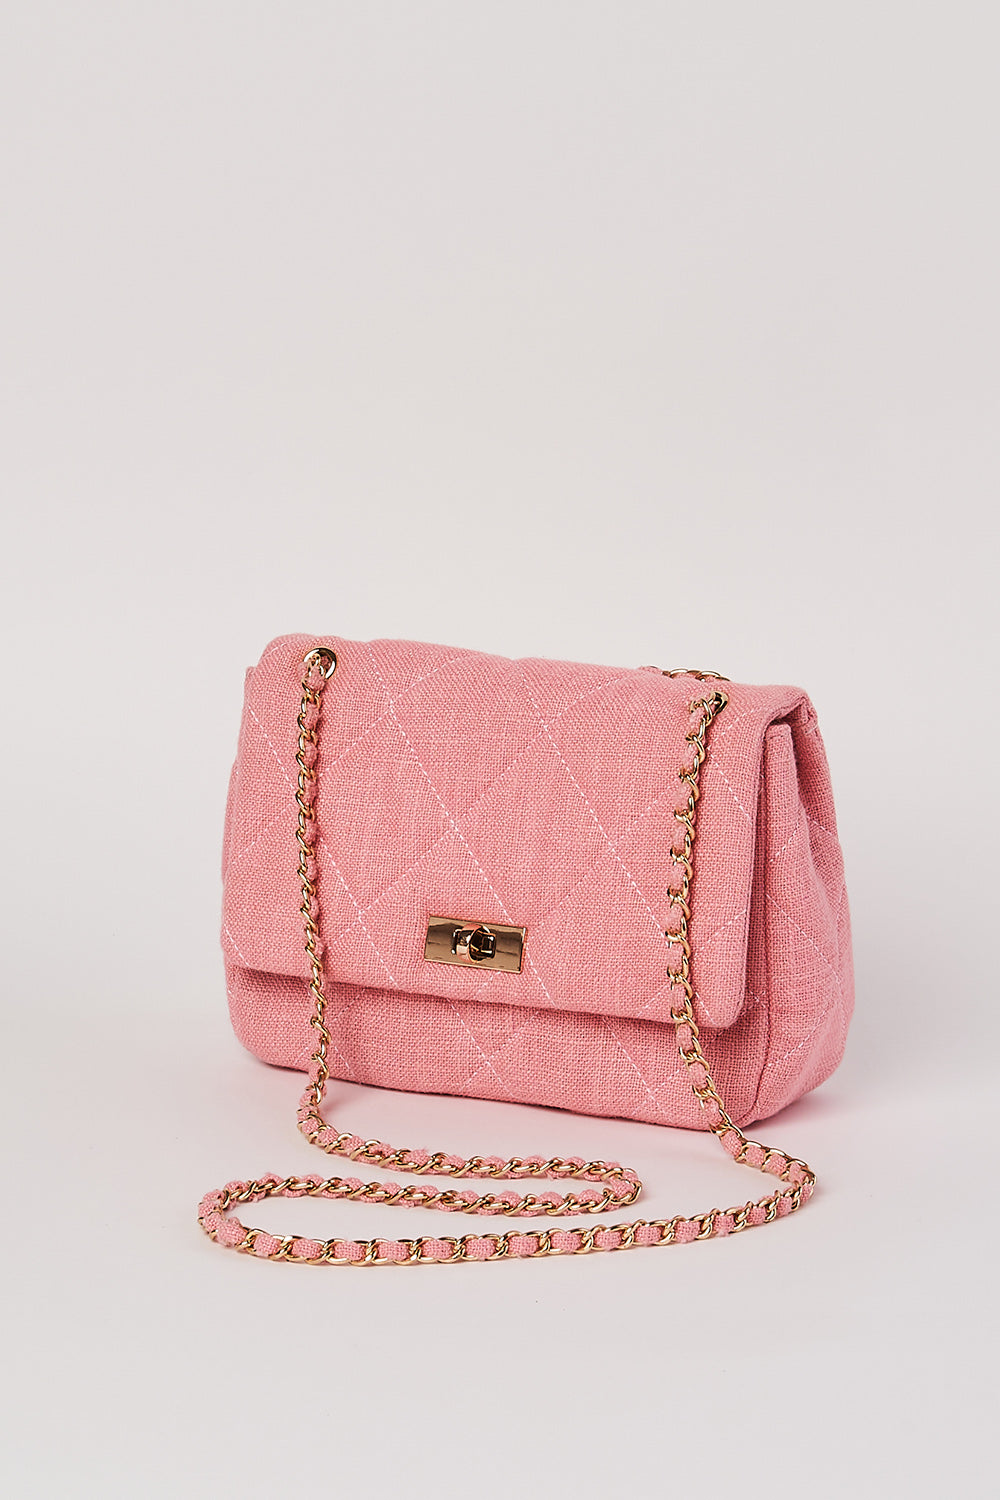 Chloé Sally Shoulder bag 359177 | Collector Square